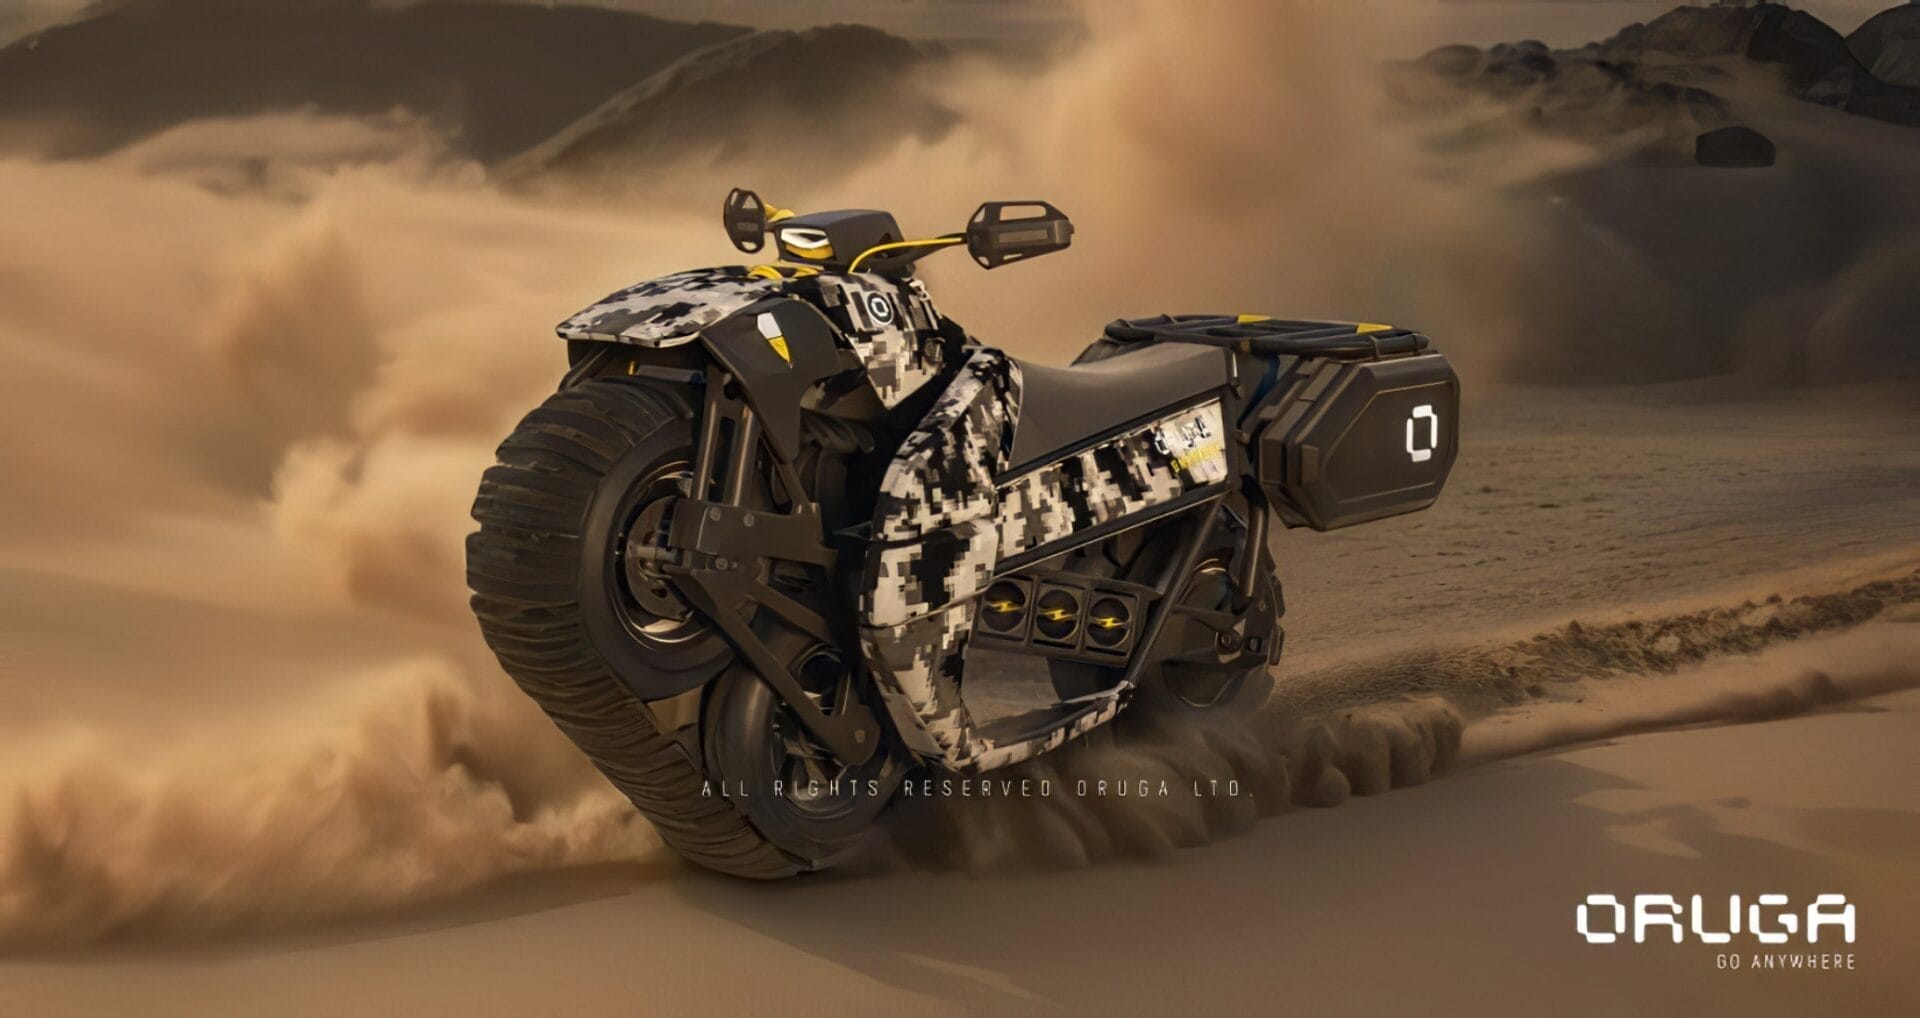 Oruga Unitrack: a futuristic all-terrain electric motorcycle